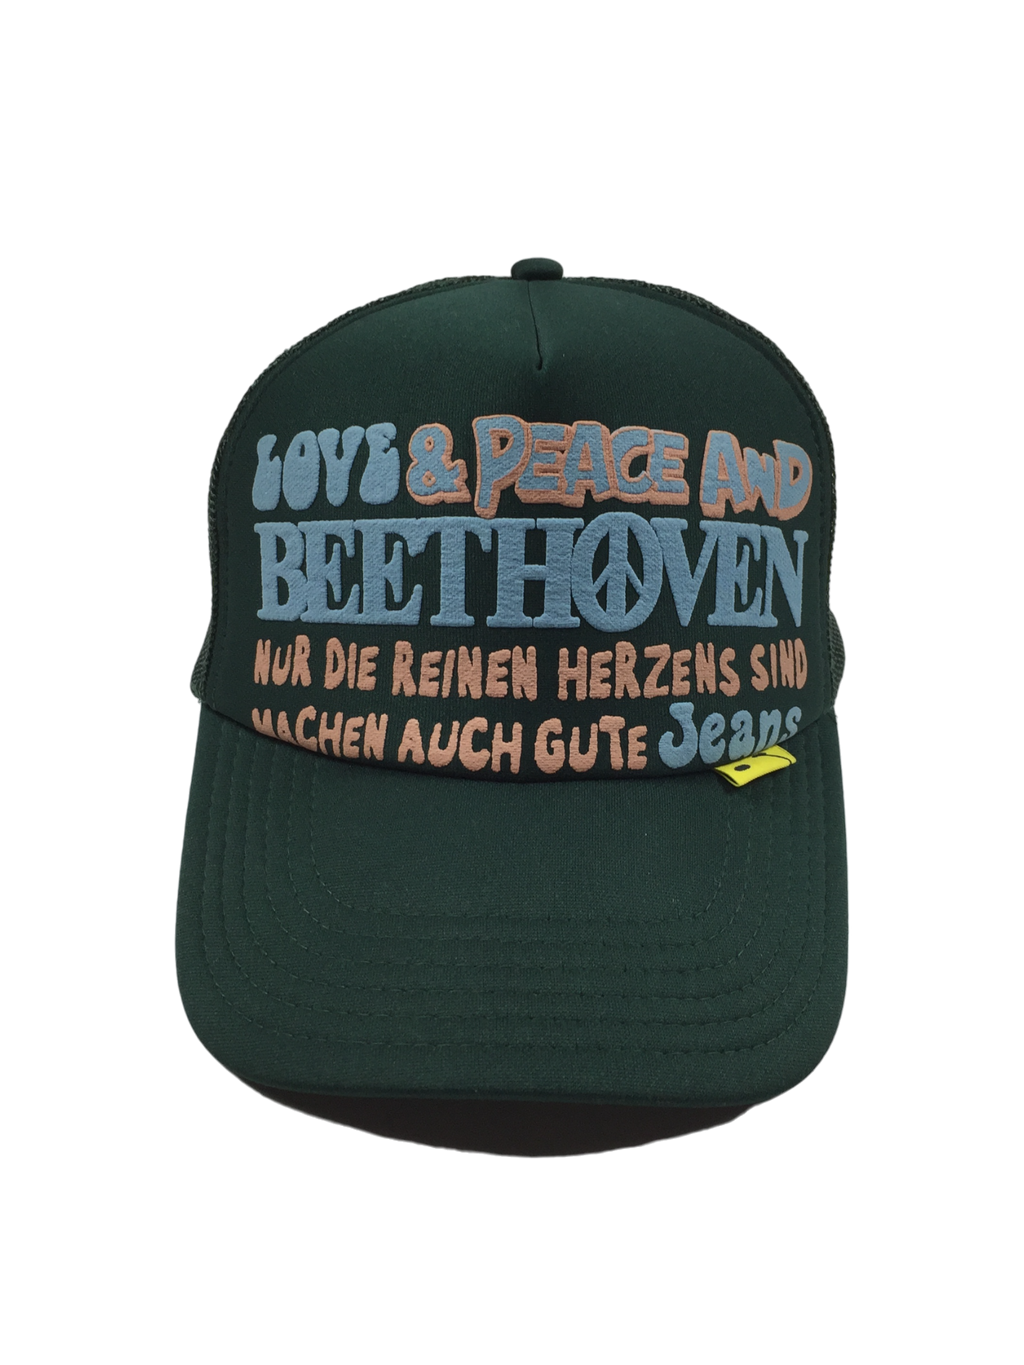 Kapital Love Peace Beethoven Green Trucker Cap